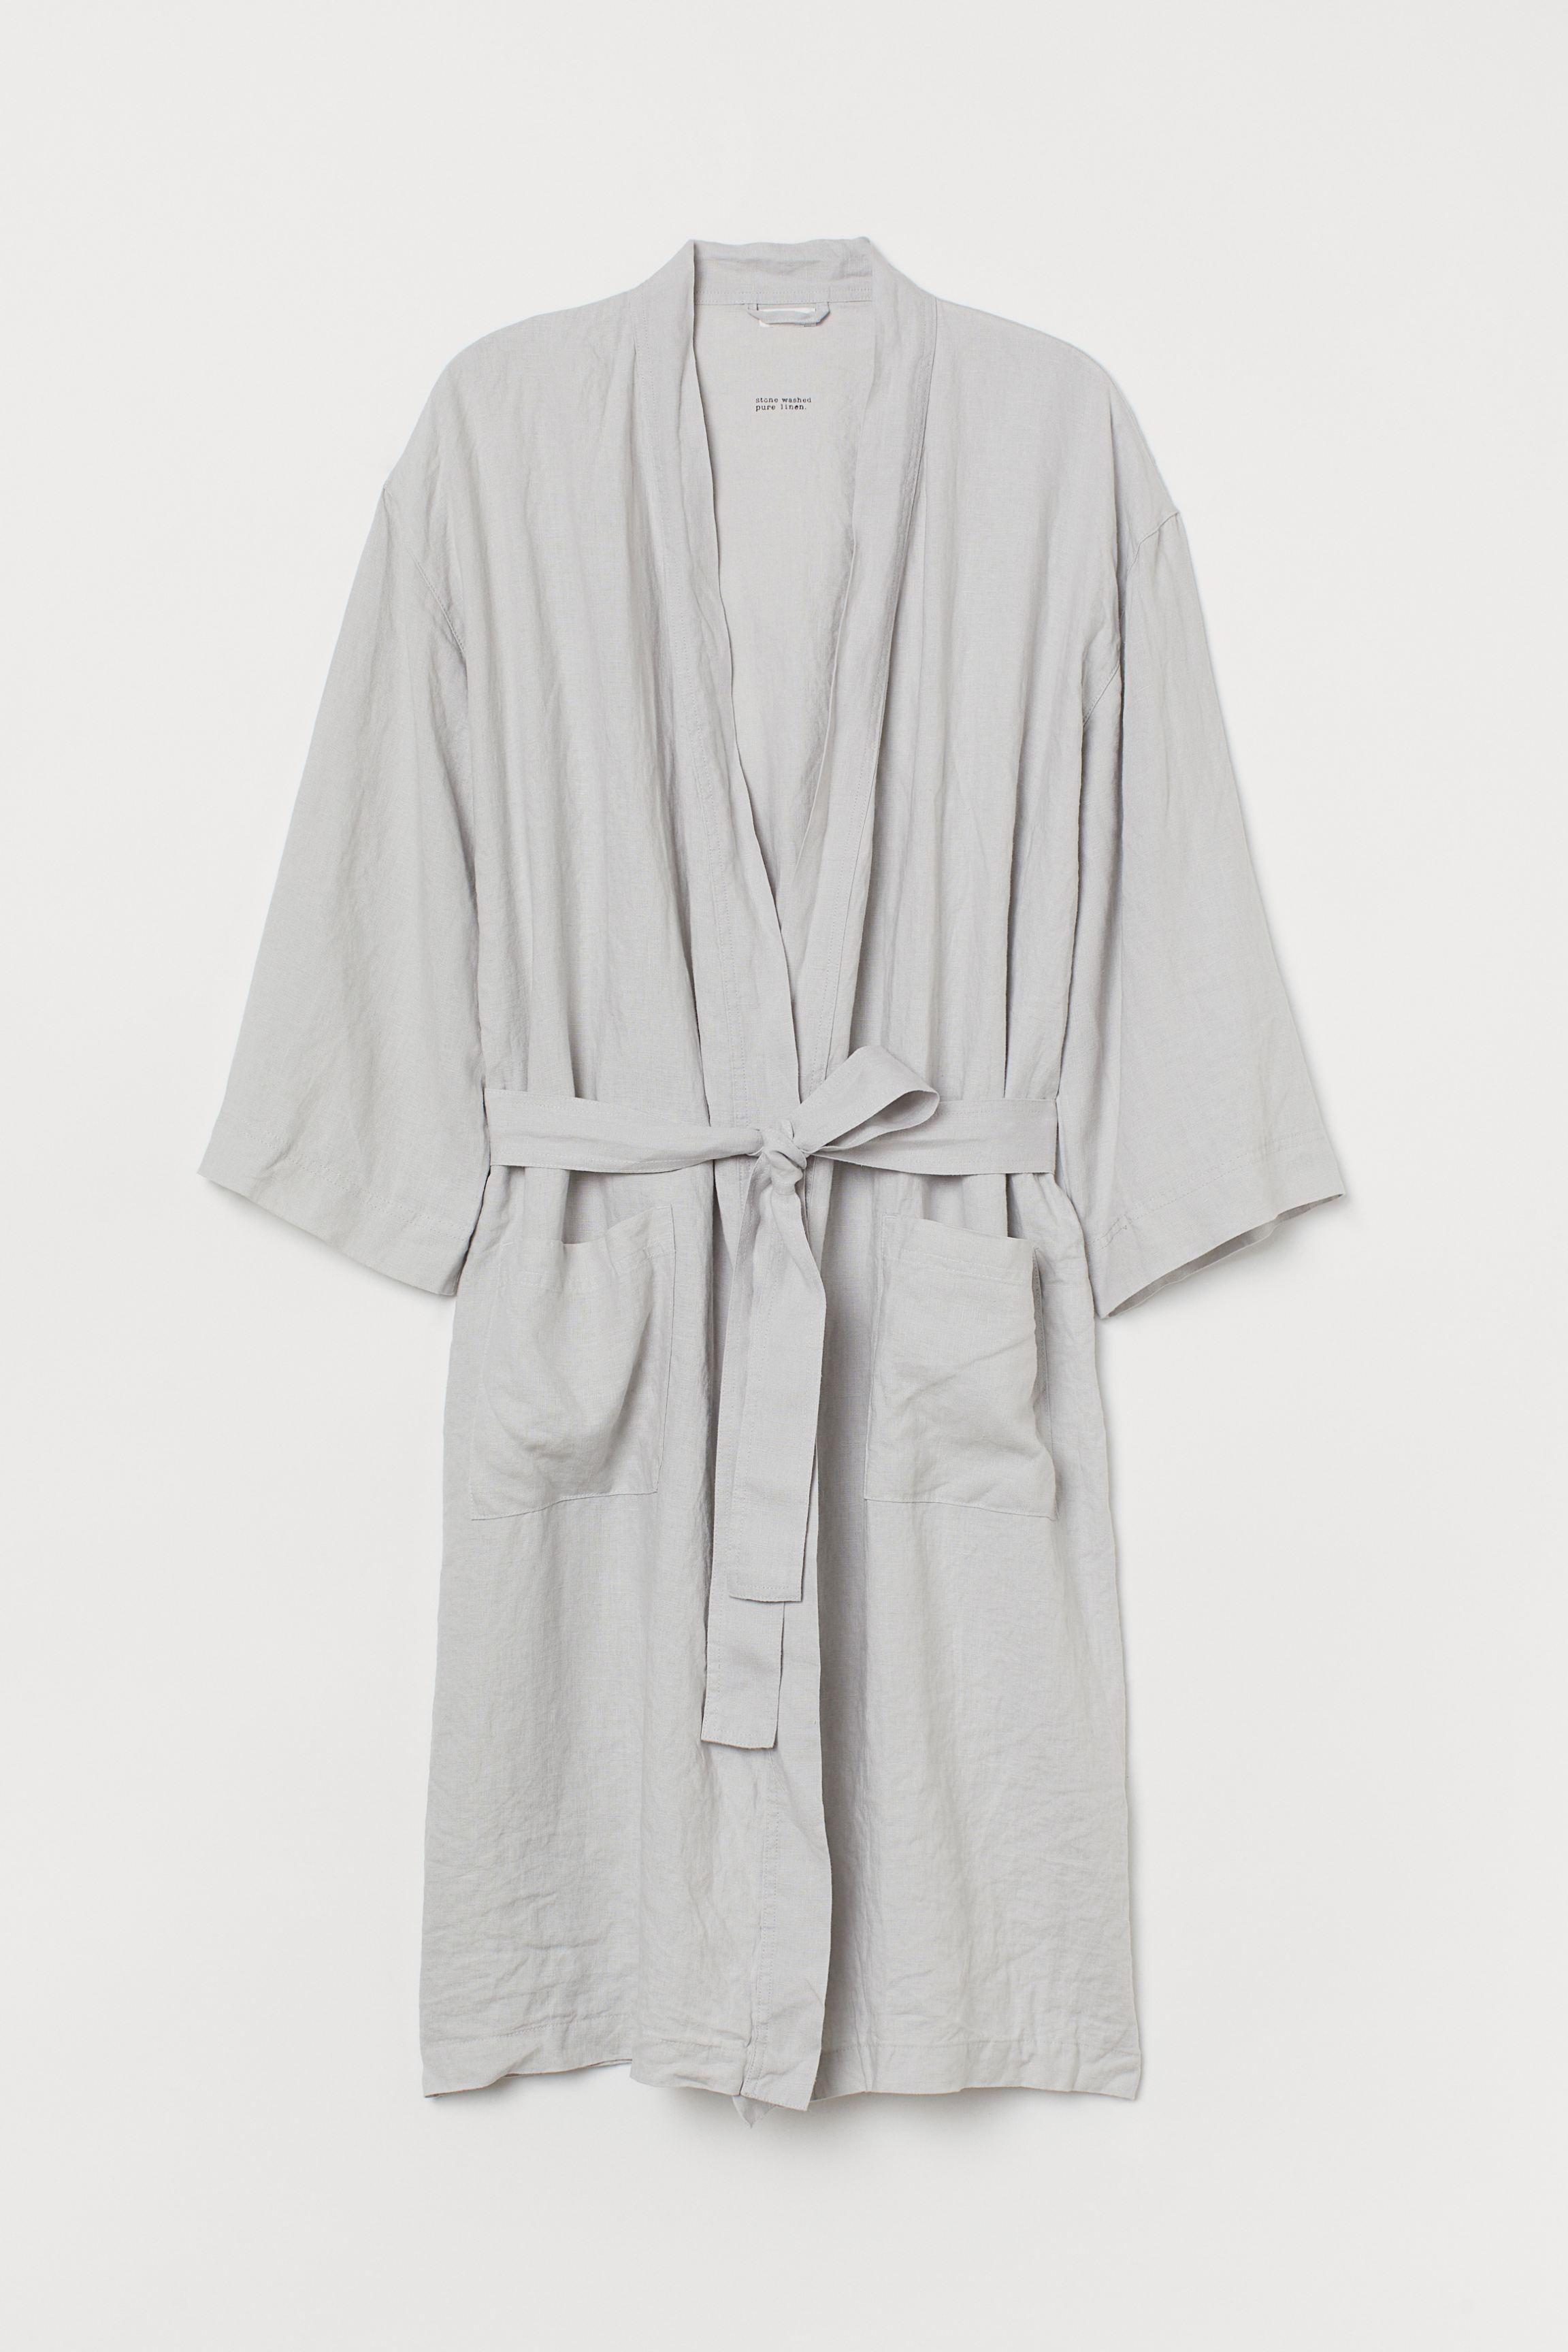 H&M Washed Linen Bathrobe in Light Gray (Gray) - Lyst